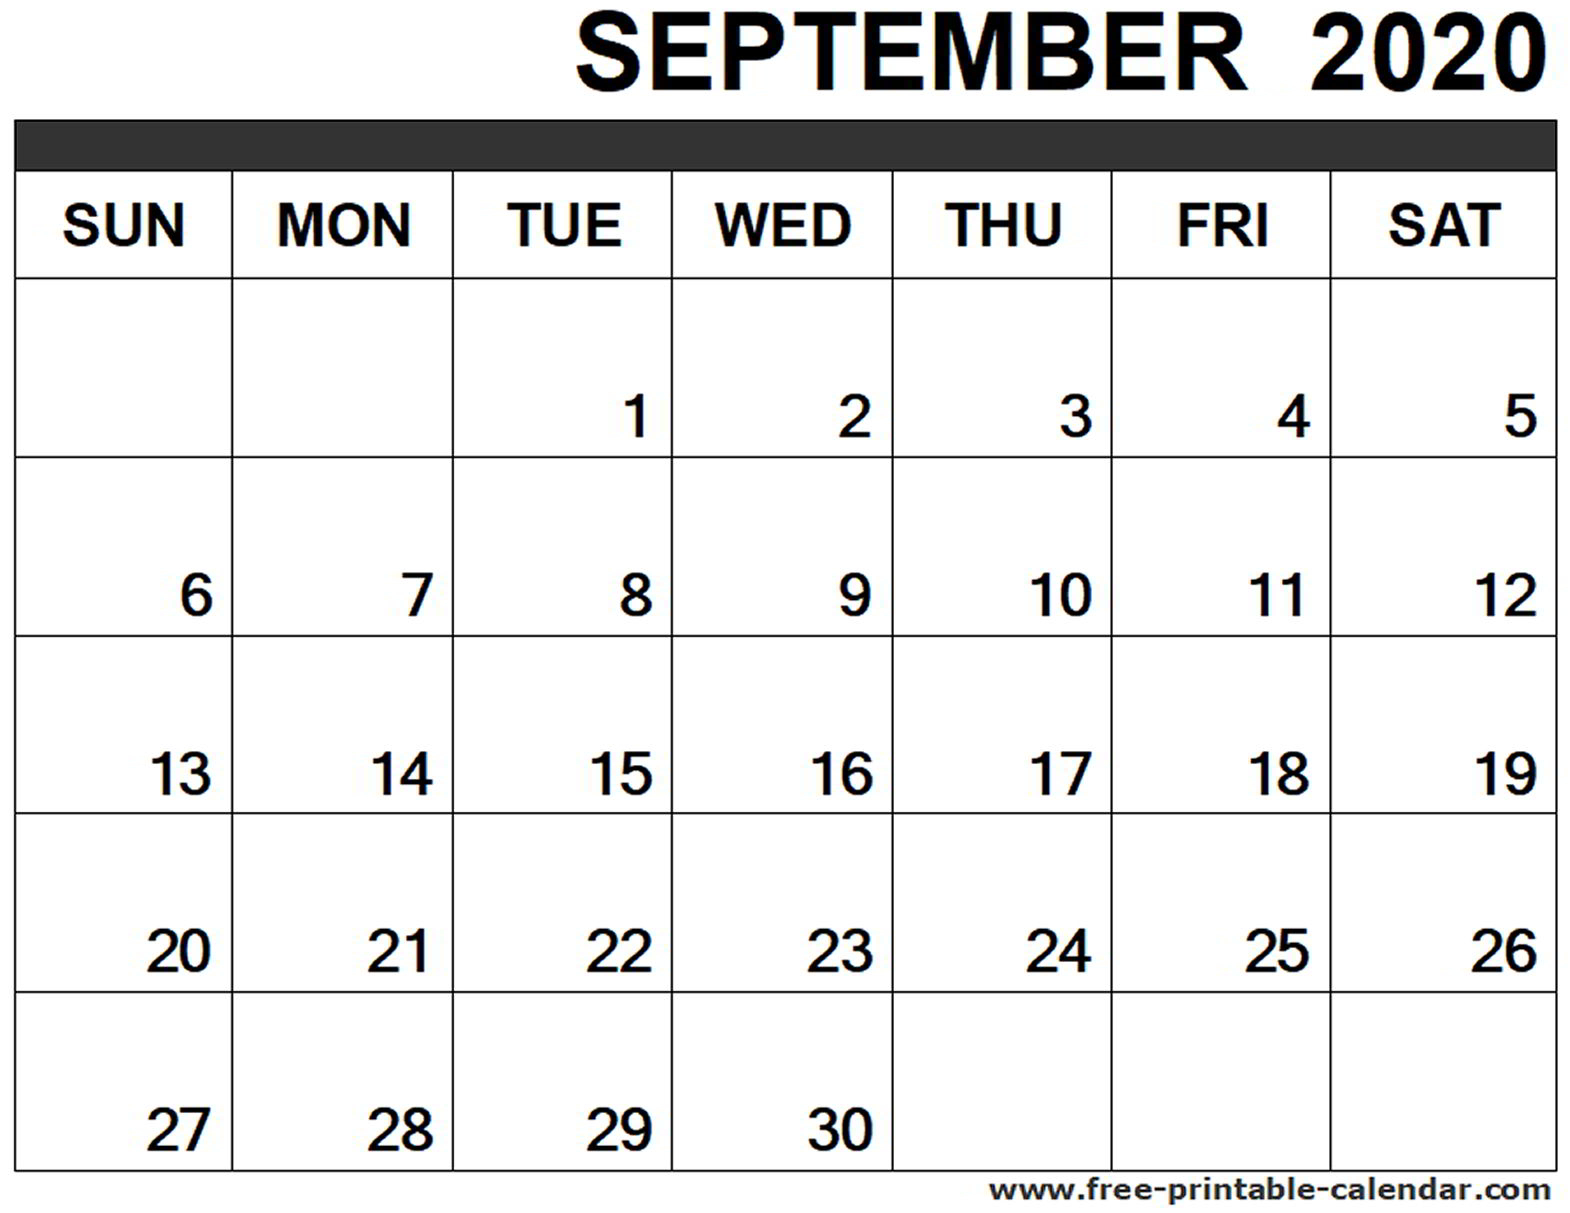 September 2020 Calendar Printable - Free-Printable-Calendar